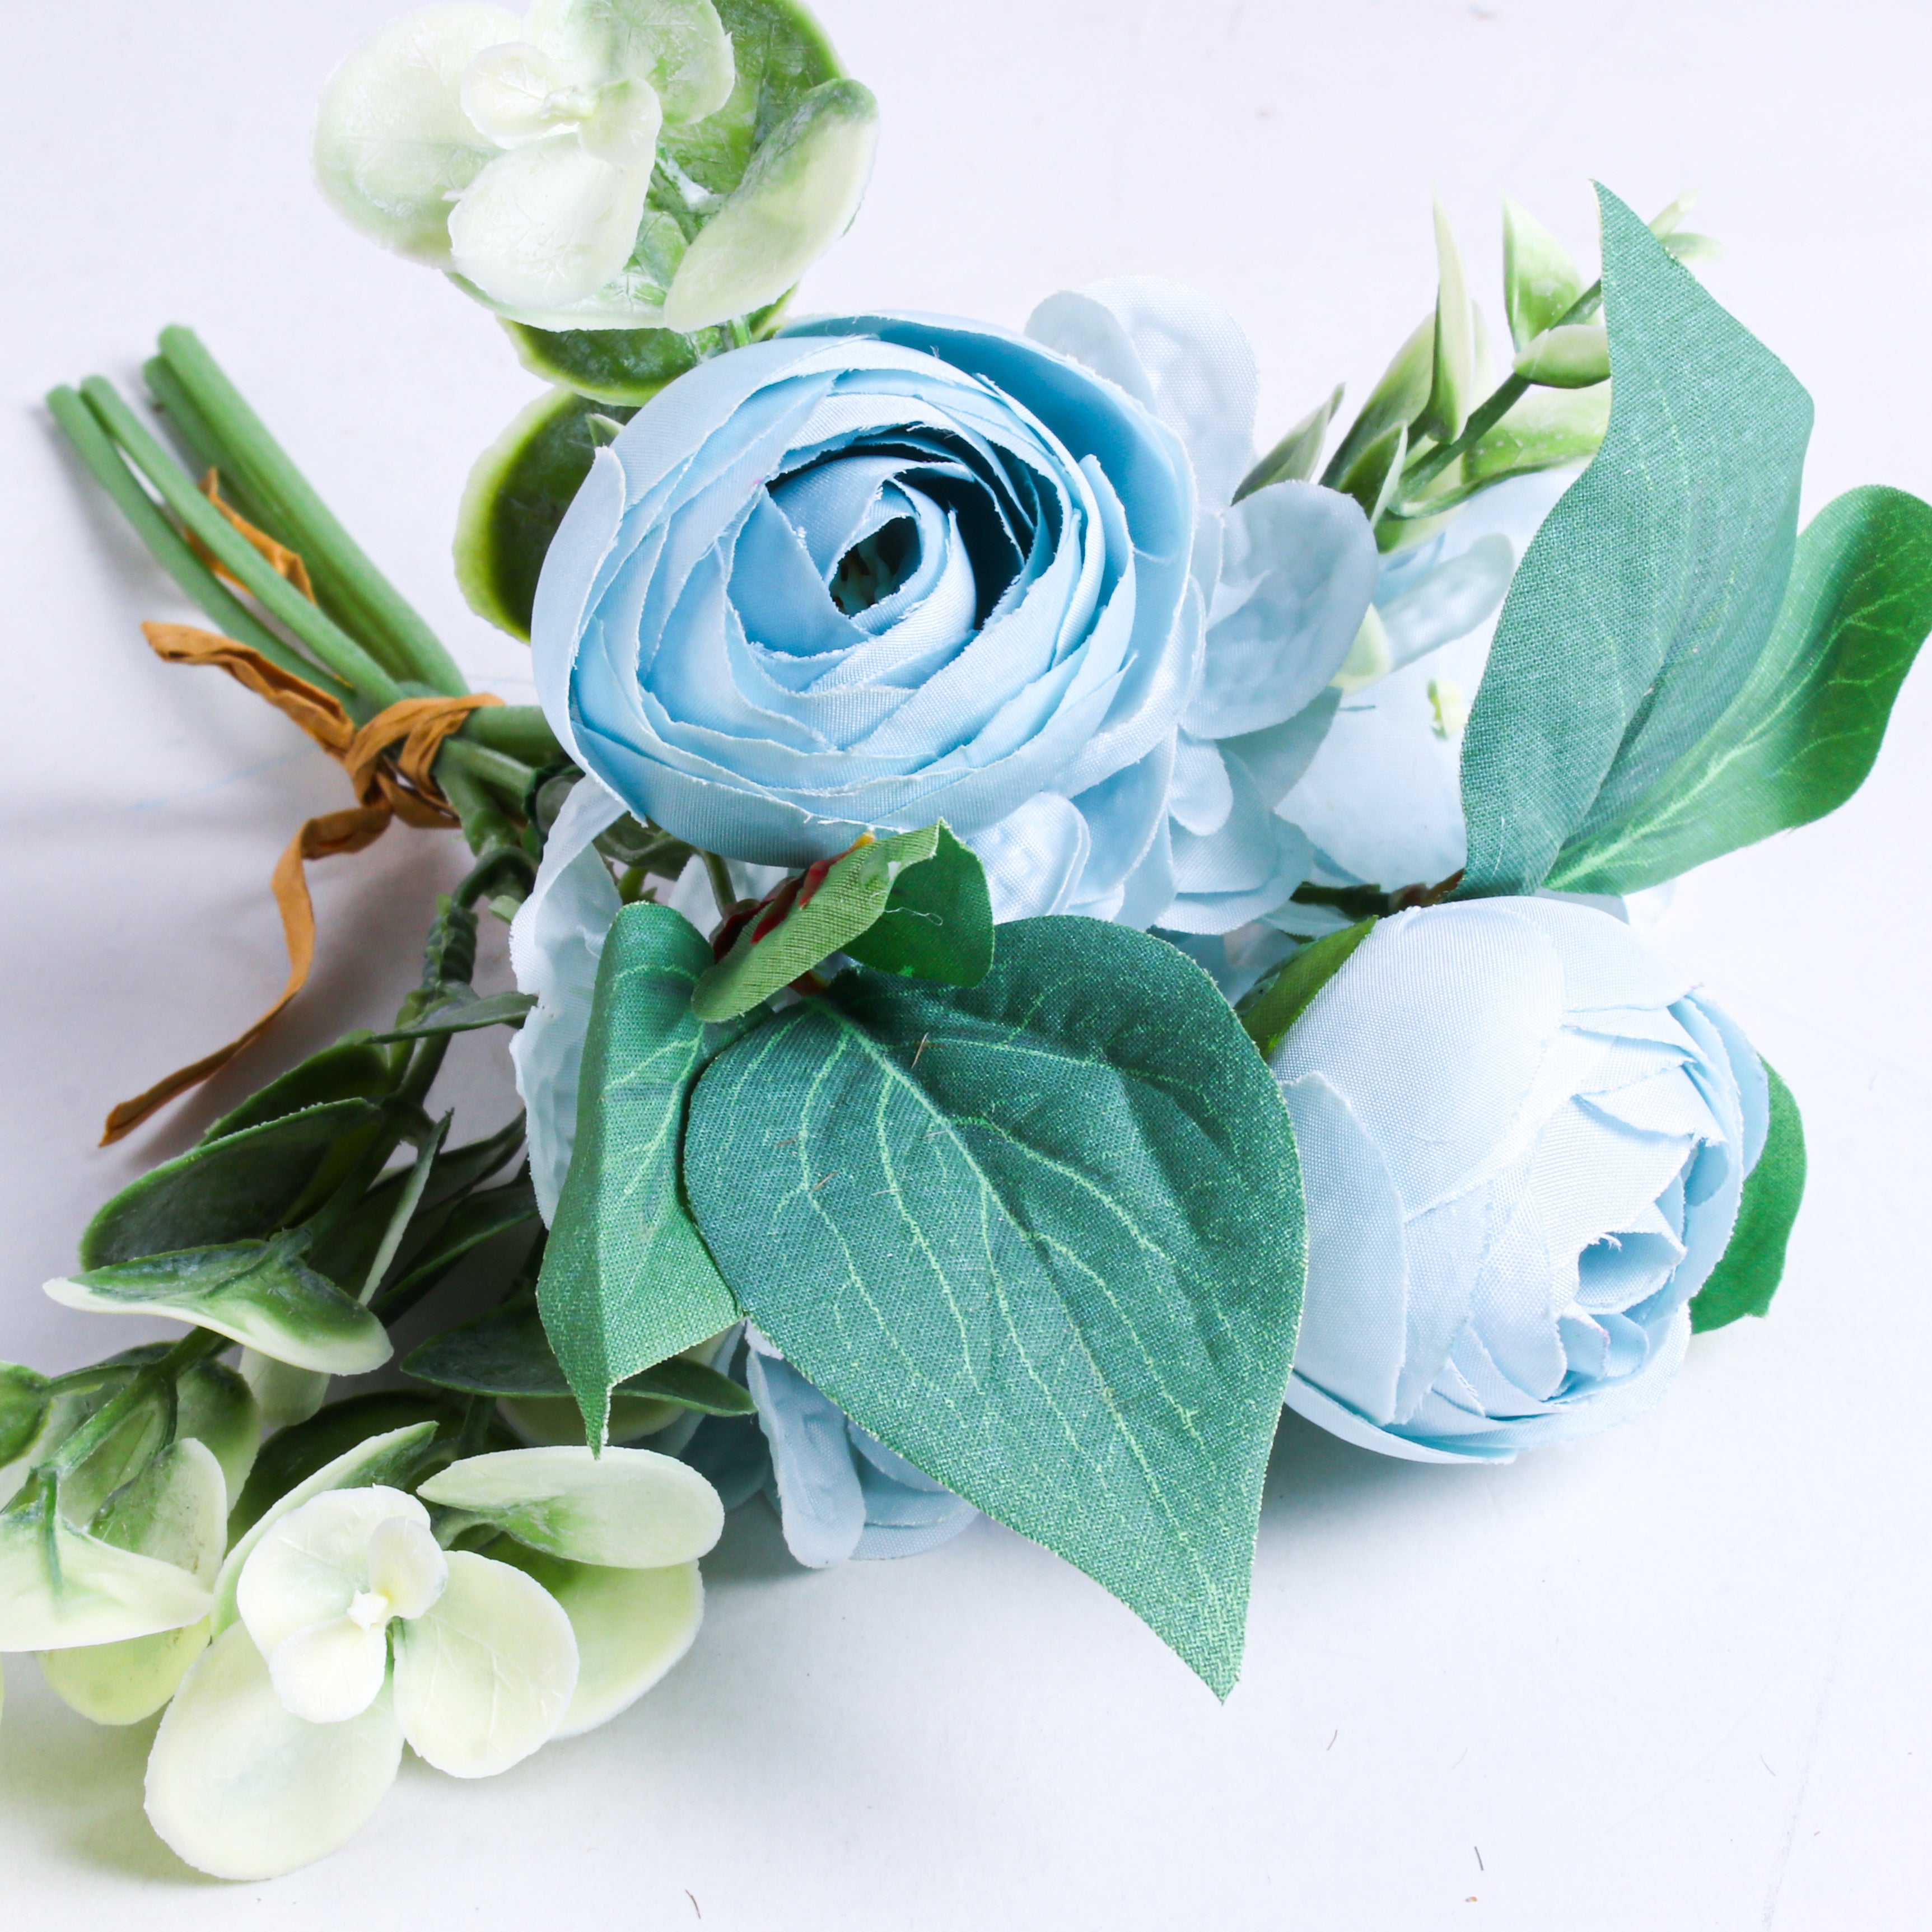 Artificial Flower Bourbon Rose Bouquet Blue 10.5Inch